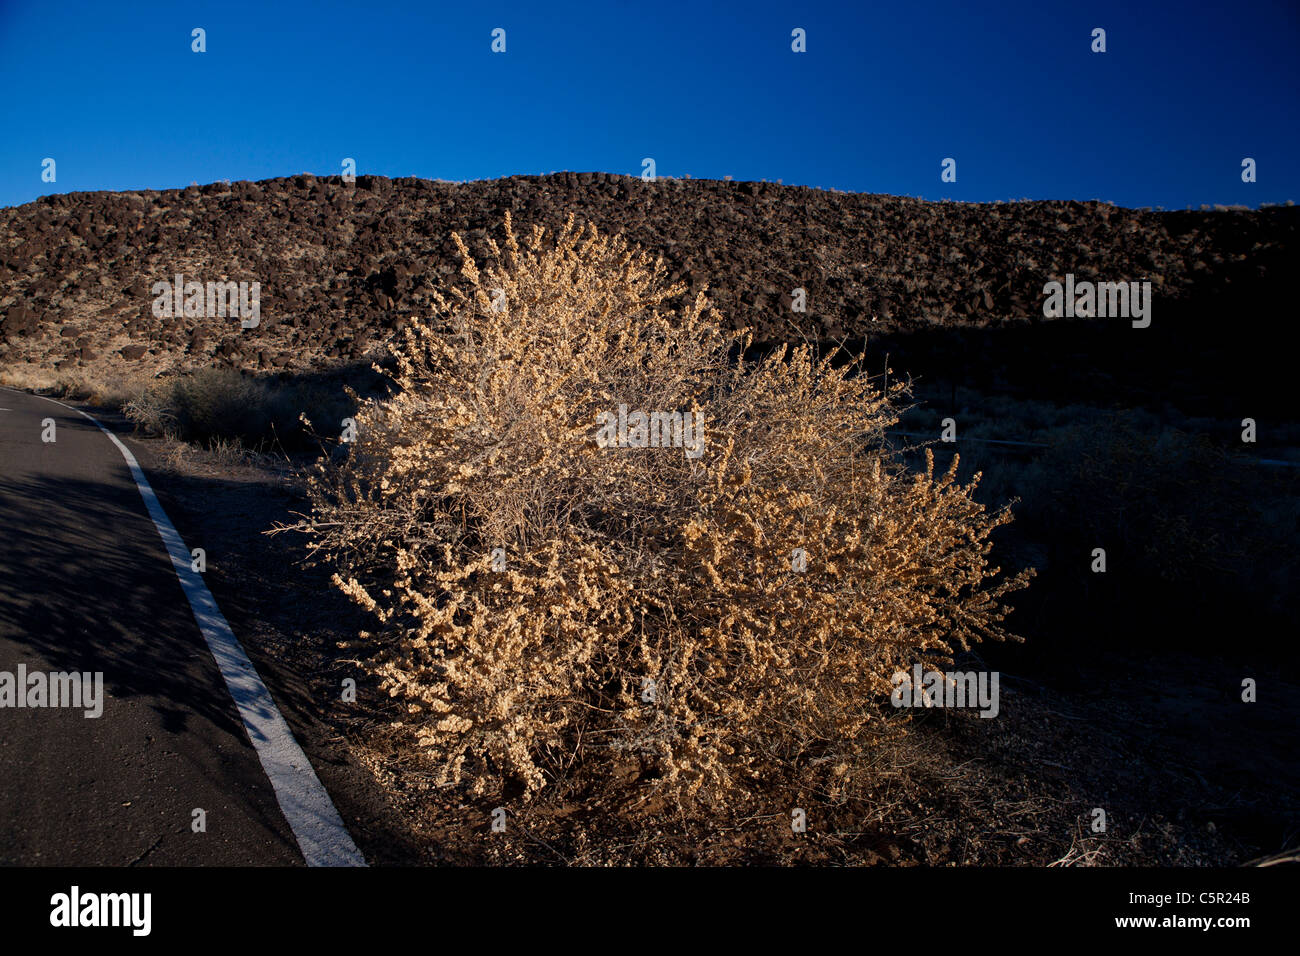 Snakeweed (Gutierrezia sarothrae) along side a road, Petroglyph National Monument, Albuquerque, New Mexico, USA. Stock Photo